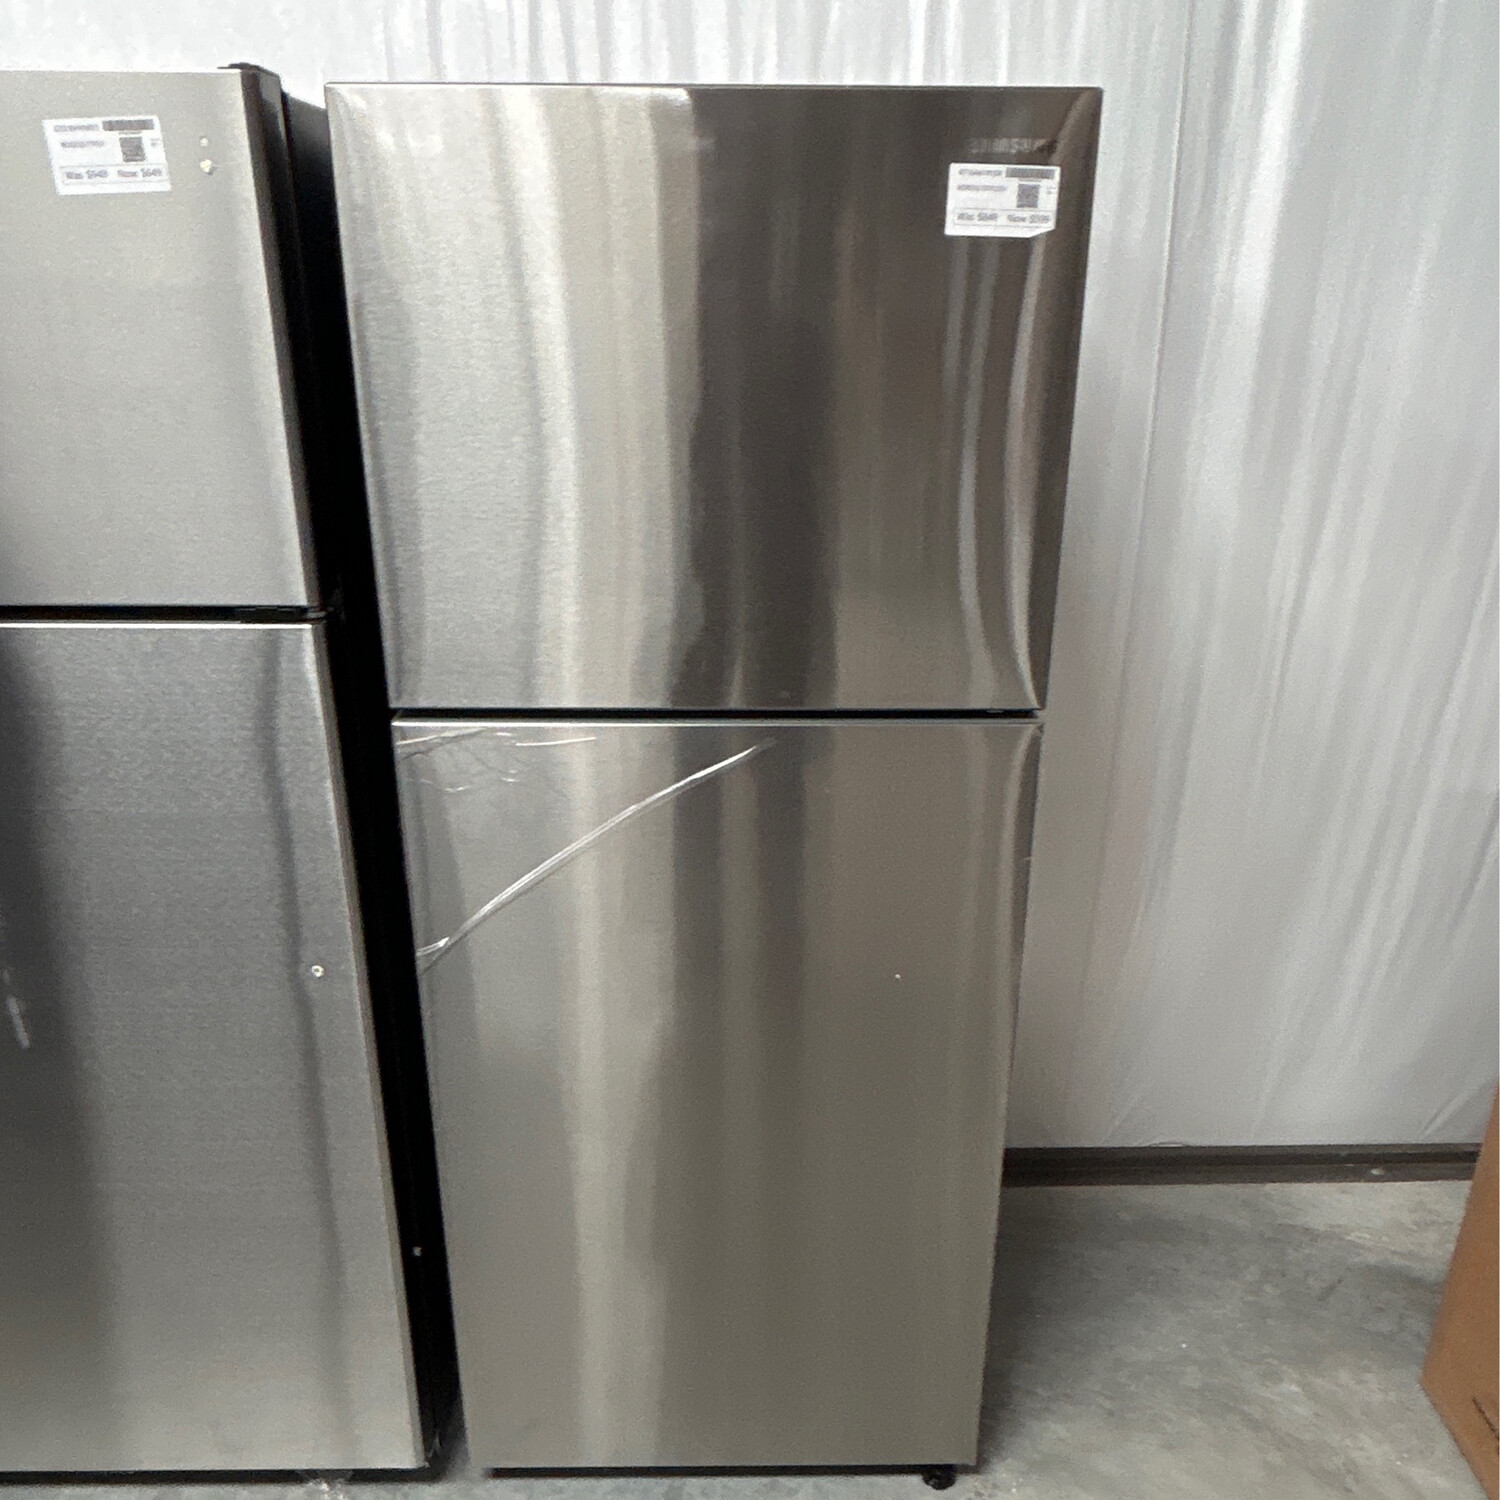 Refrigerator Samsung 15.6-cu ft Counter Depth Top-Freezer Stainless Steel RT16A6195SR MSRP $849